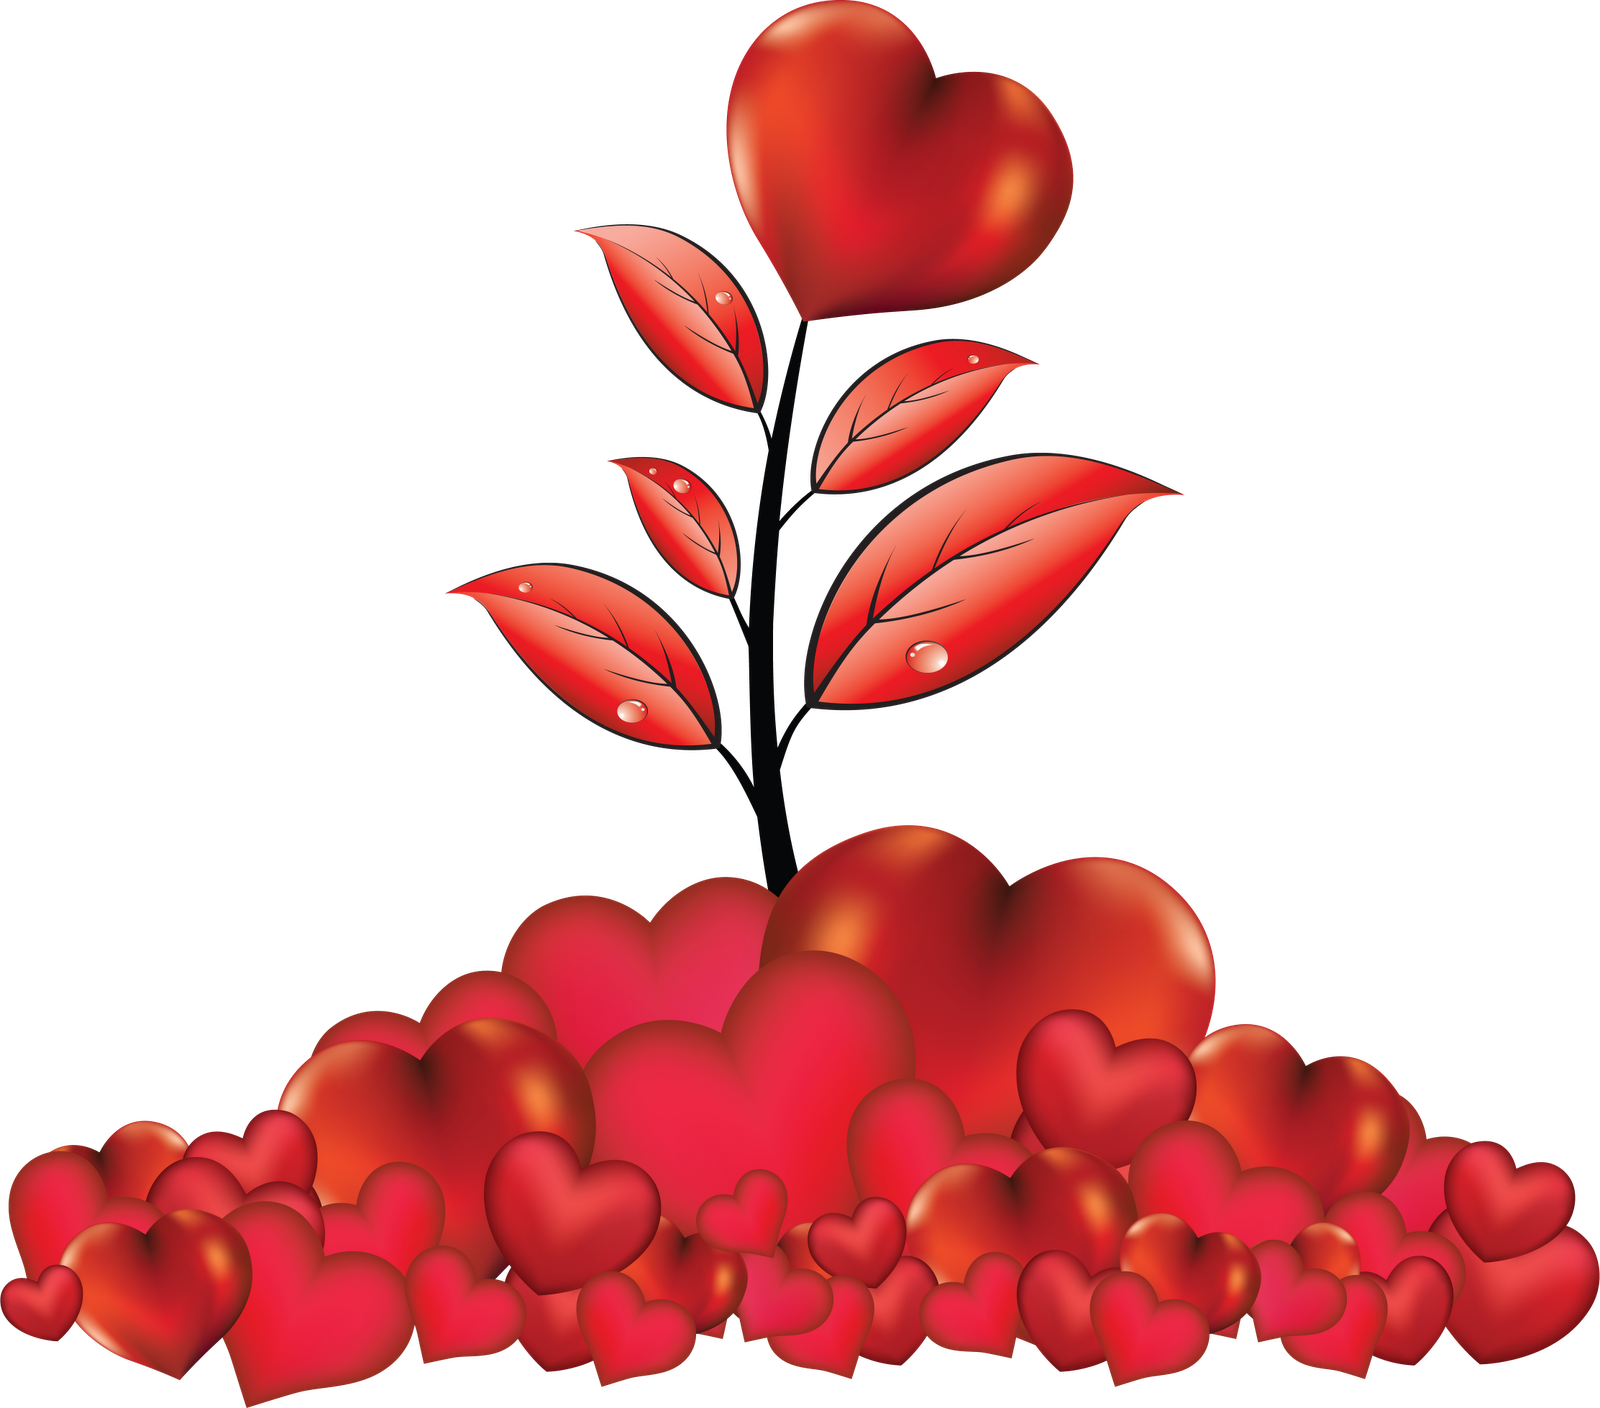 Pohon jantung merah PNG Gambar Transparan